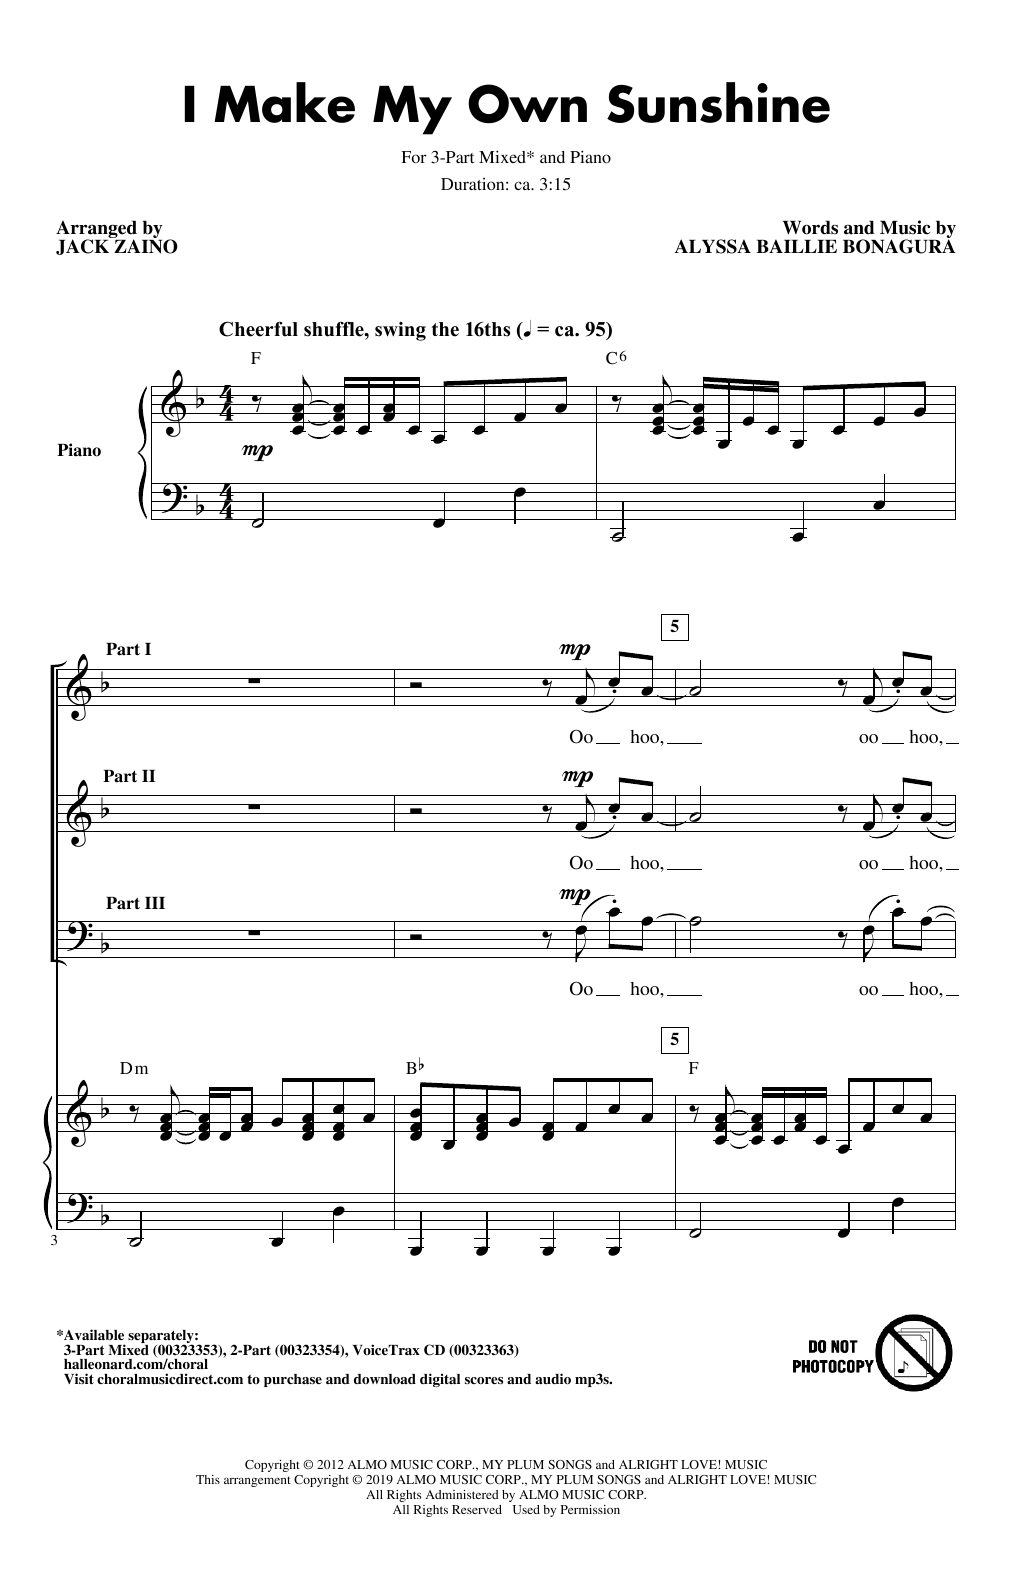 Alyssa Bonagura I Make My Own Sunshine (arr. Jack Zaino) sheet music notes and chords arranged for 3-Part Mixed Choir